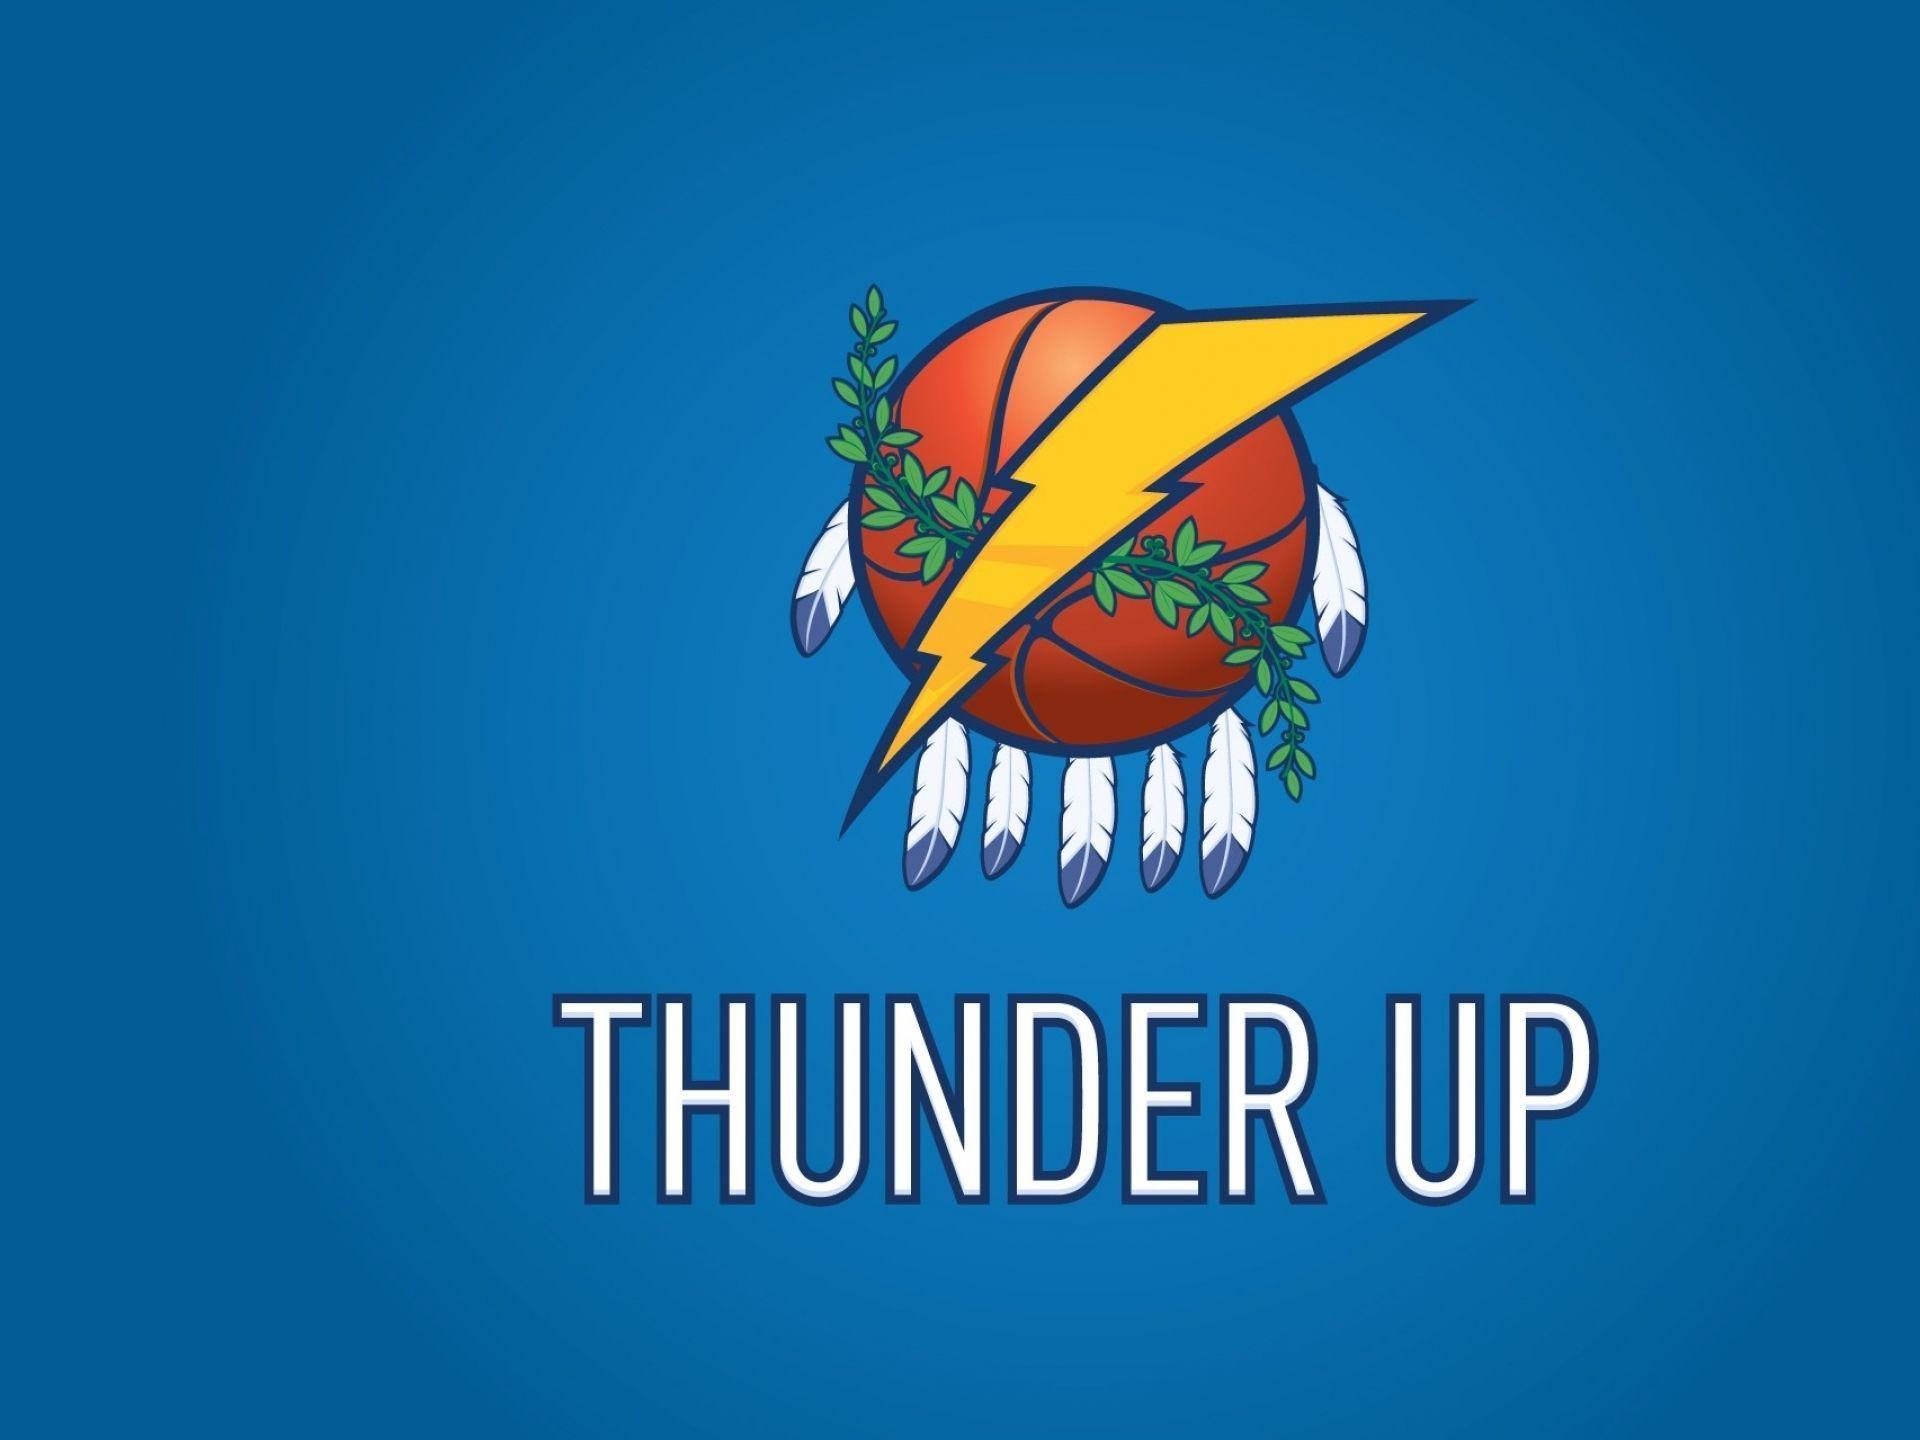 Oklahoma City Thunder Basketball Club Wallpaper 3. OKC Thunder